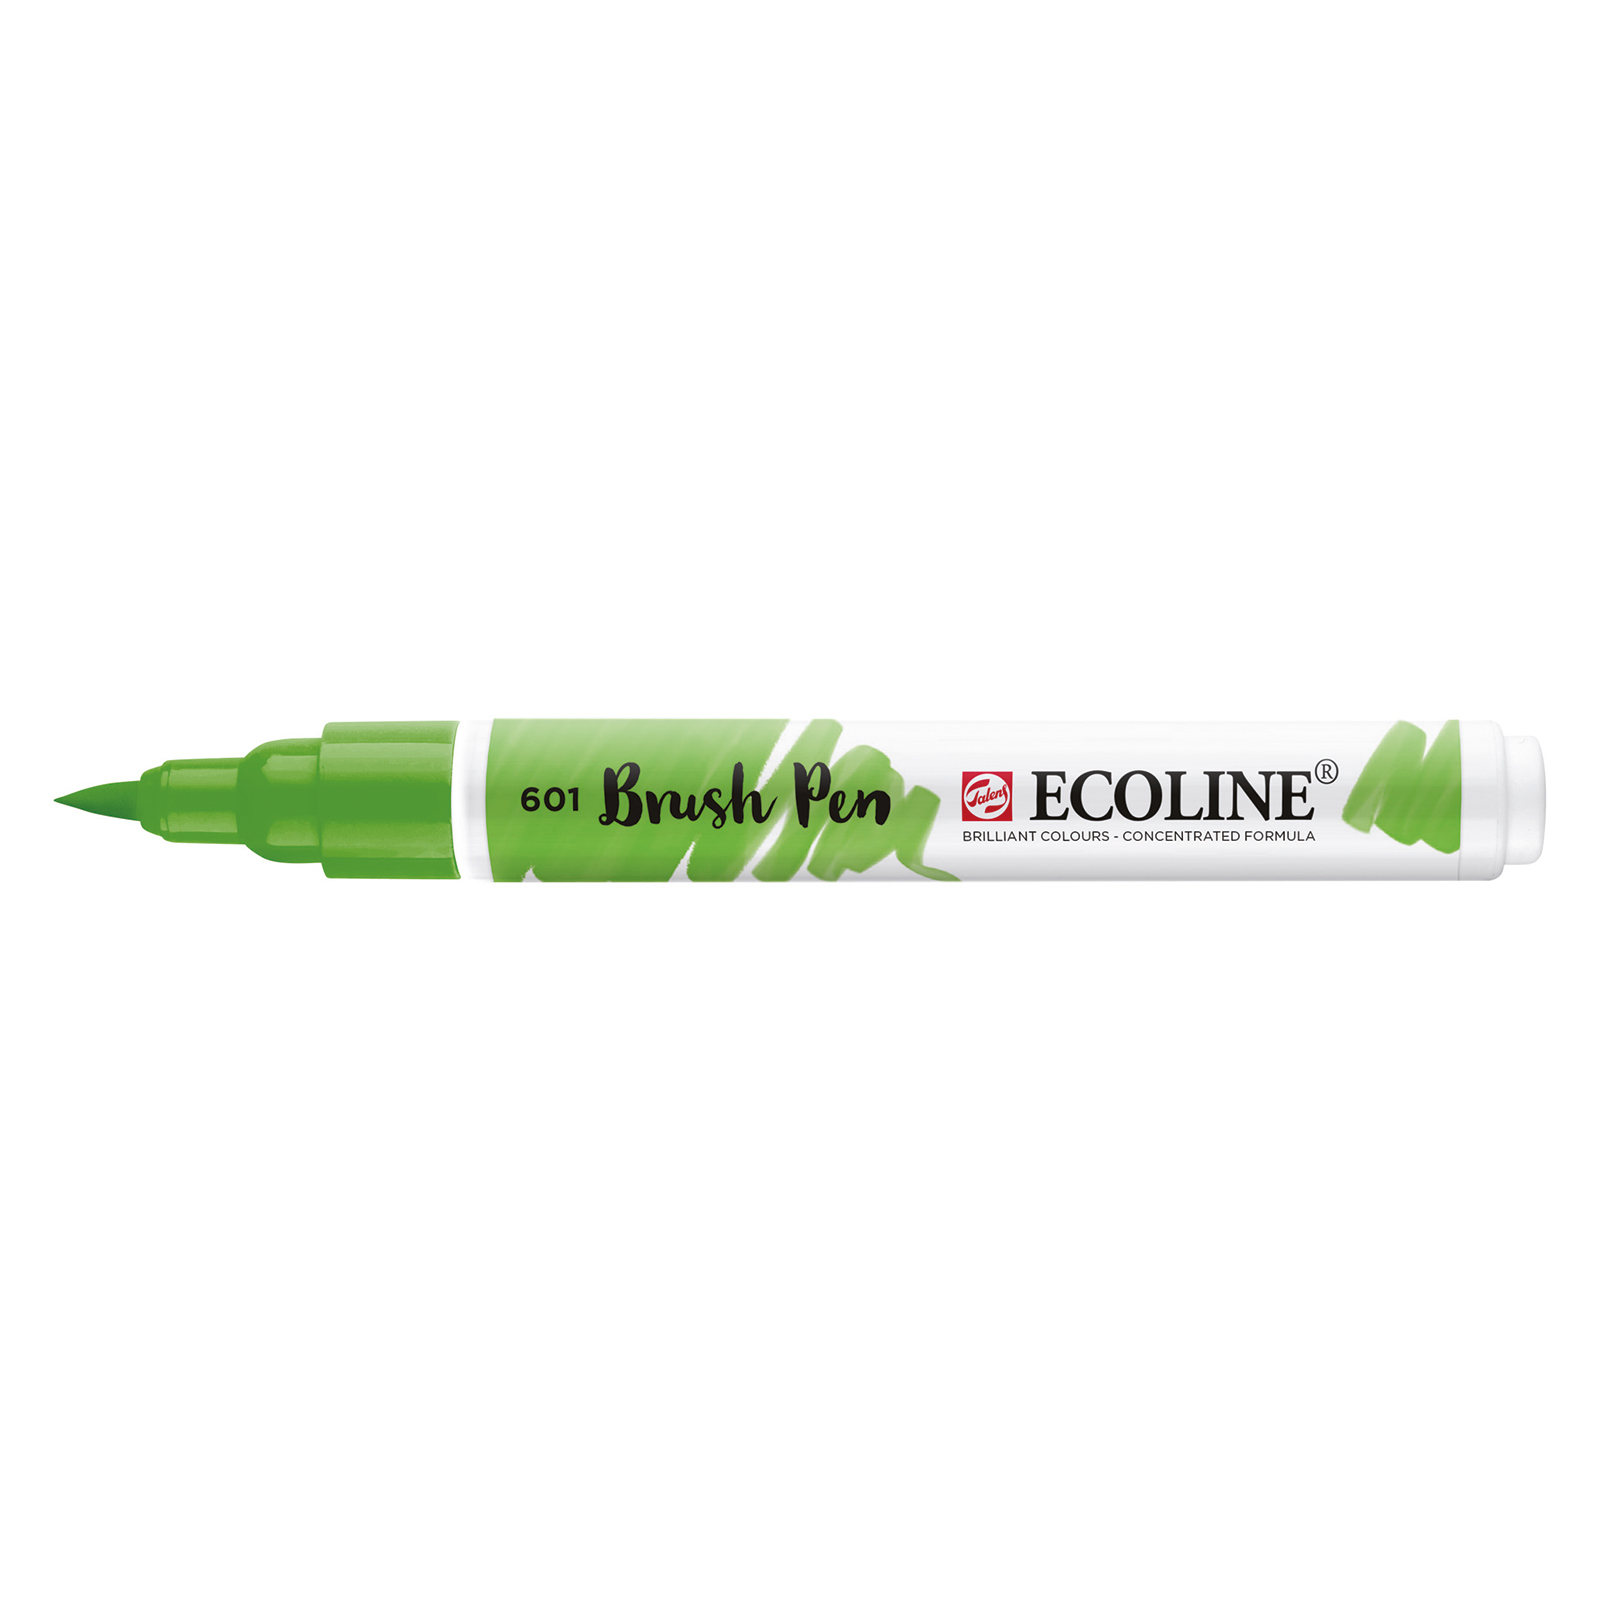 Ecoline • Brush Pen Verde Claro 601